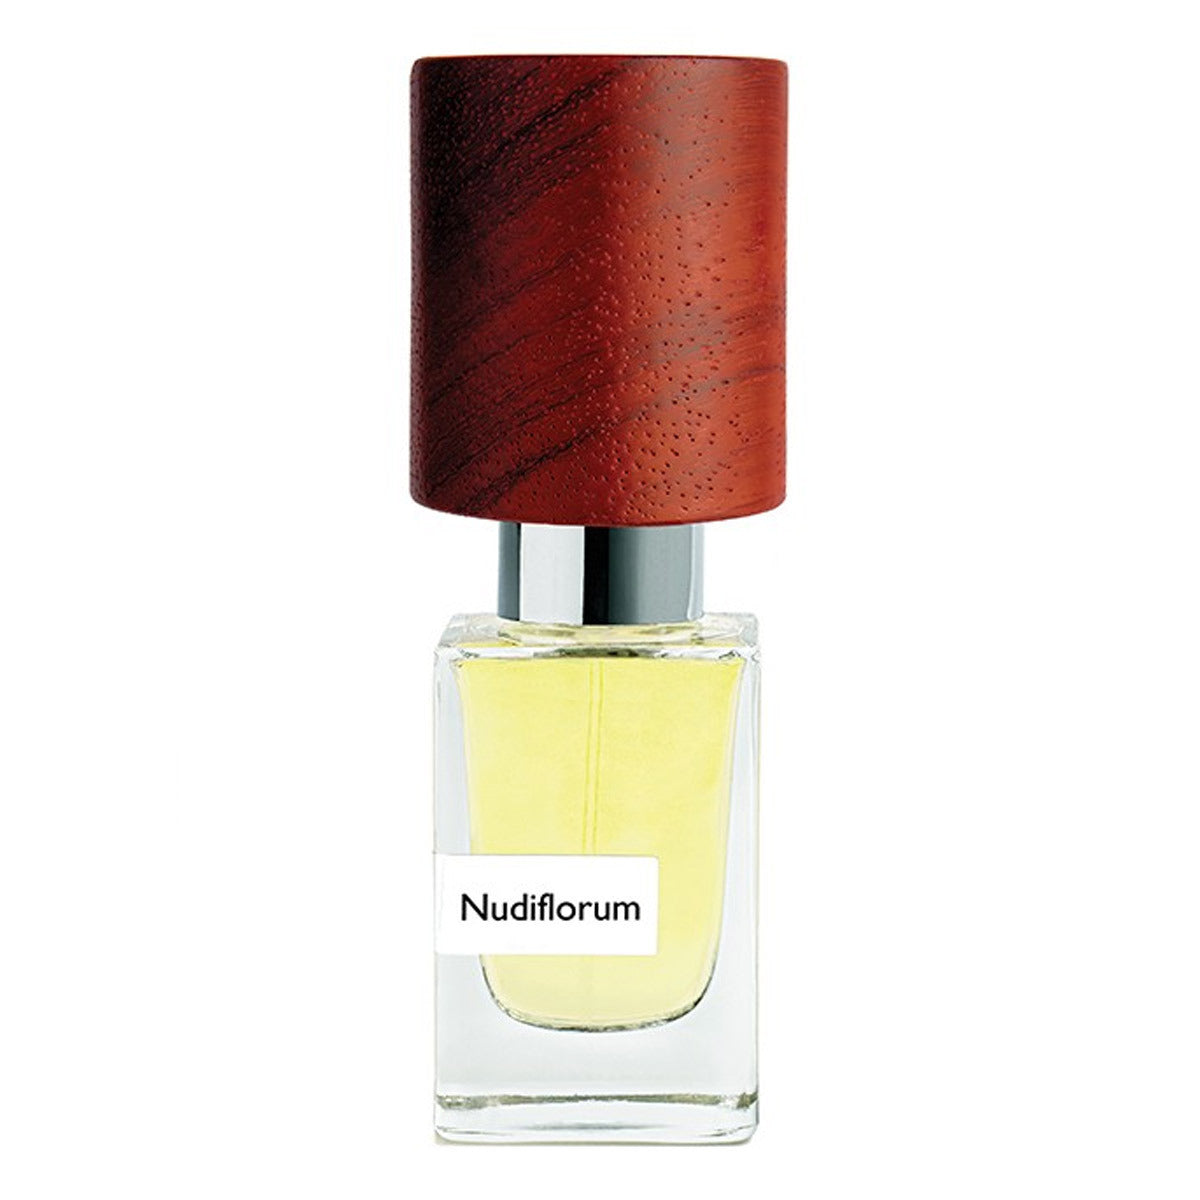 Primary image of Nudiflorum Extrait de Parfum